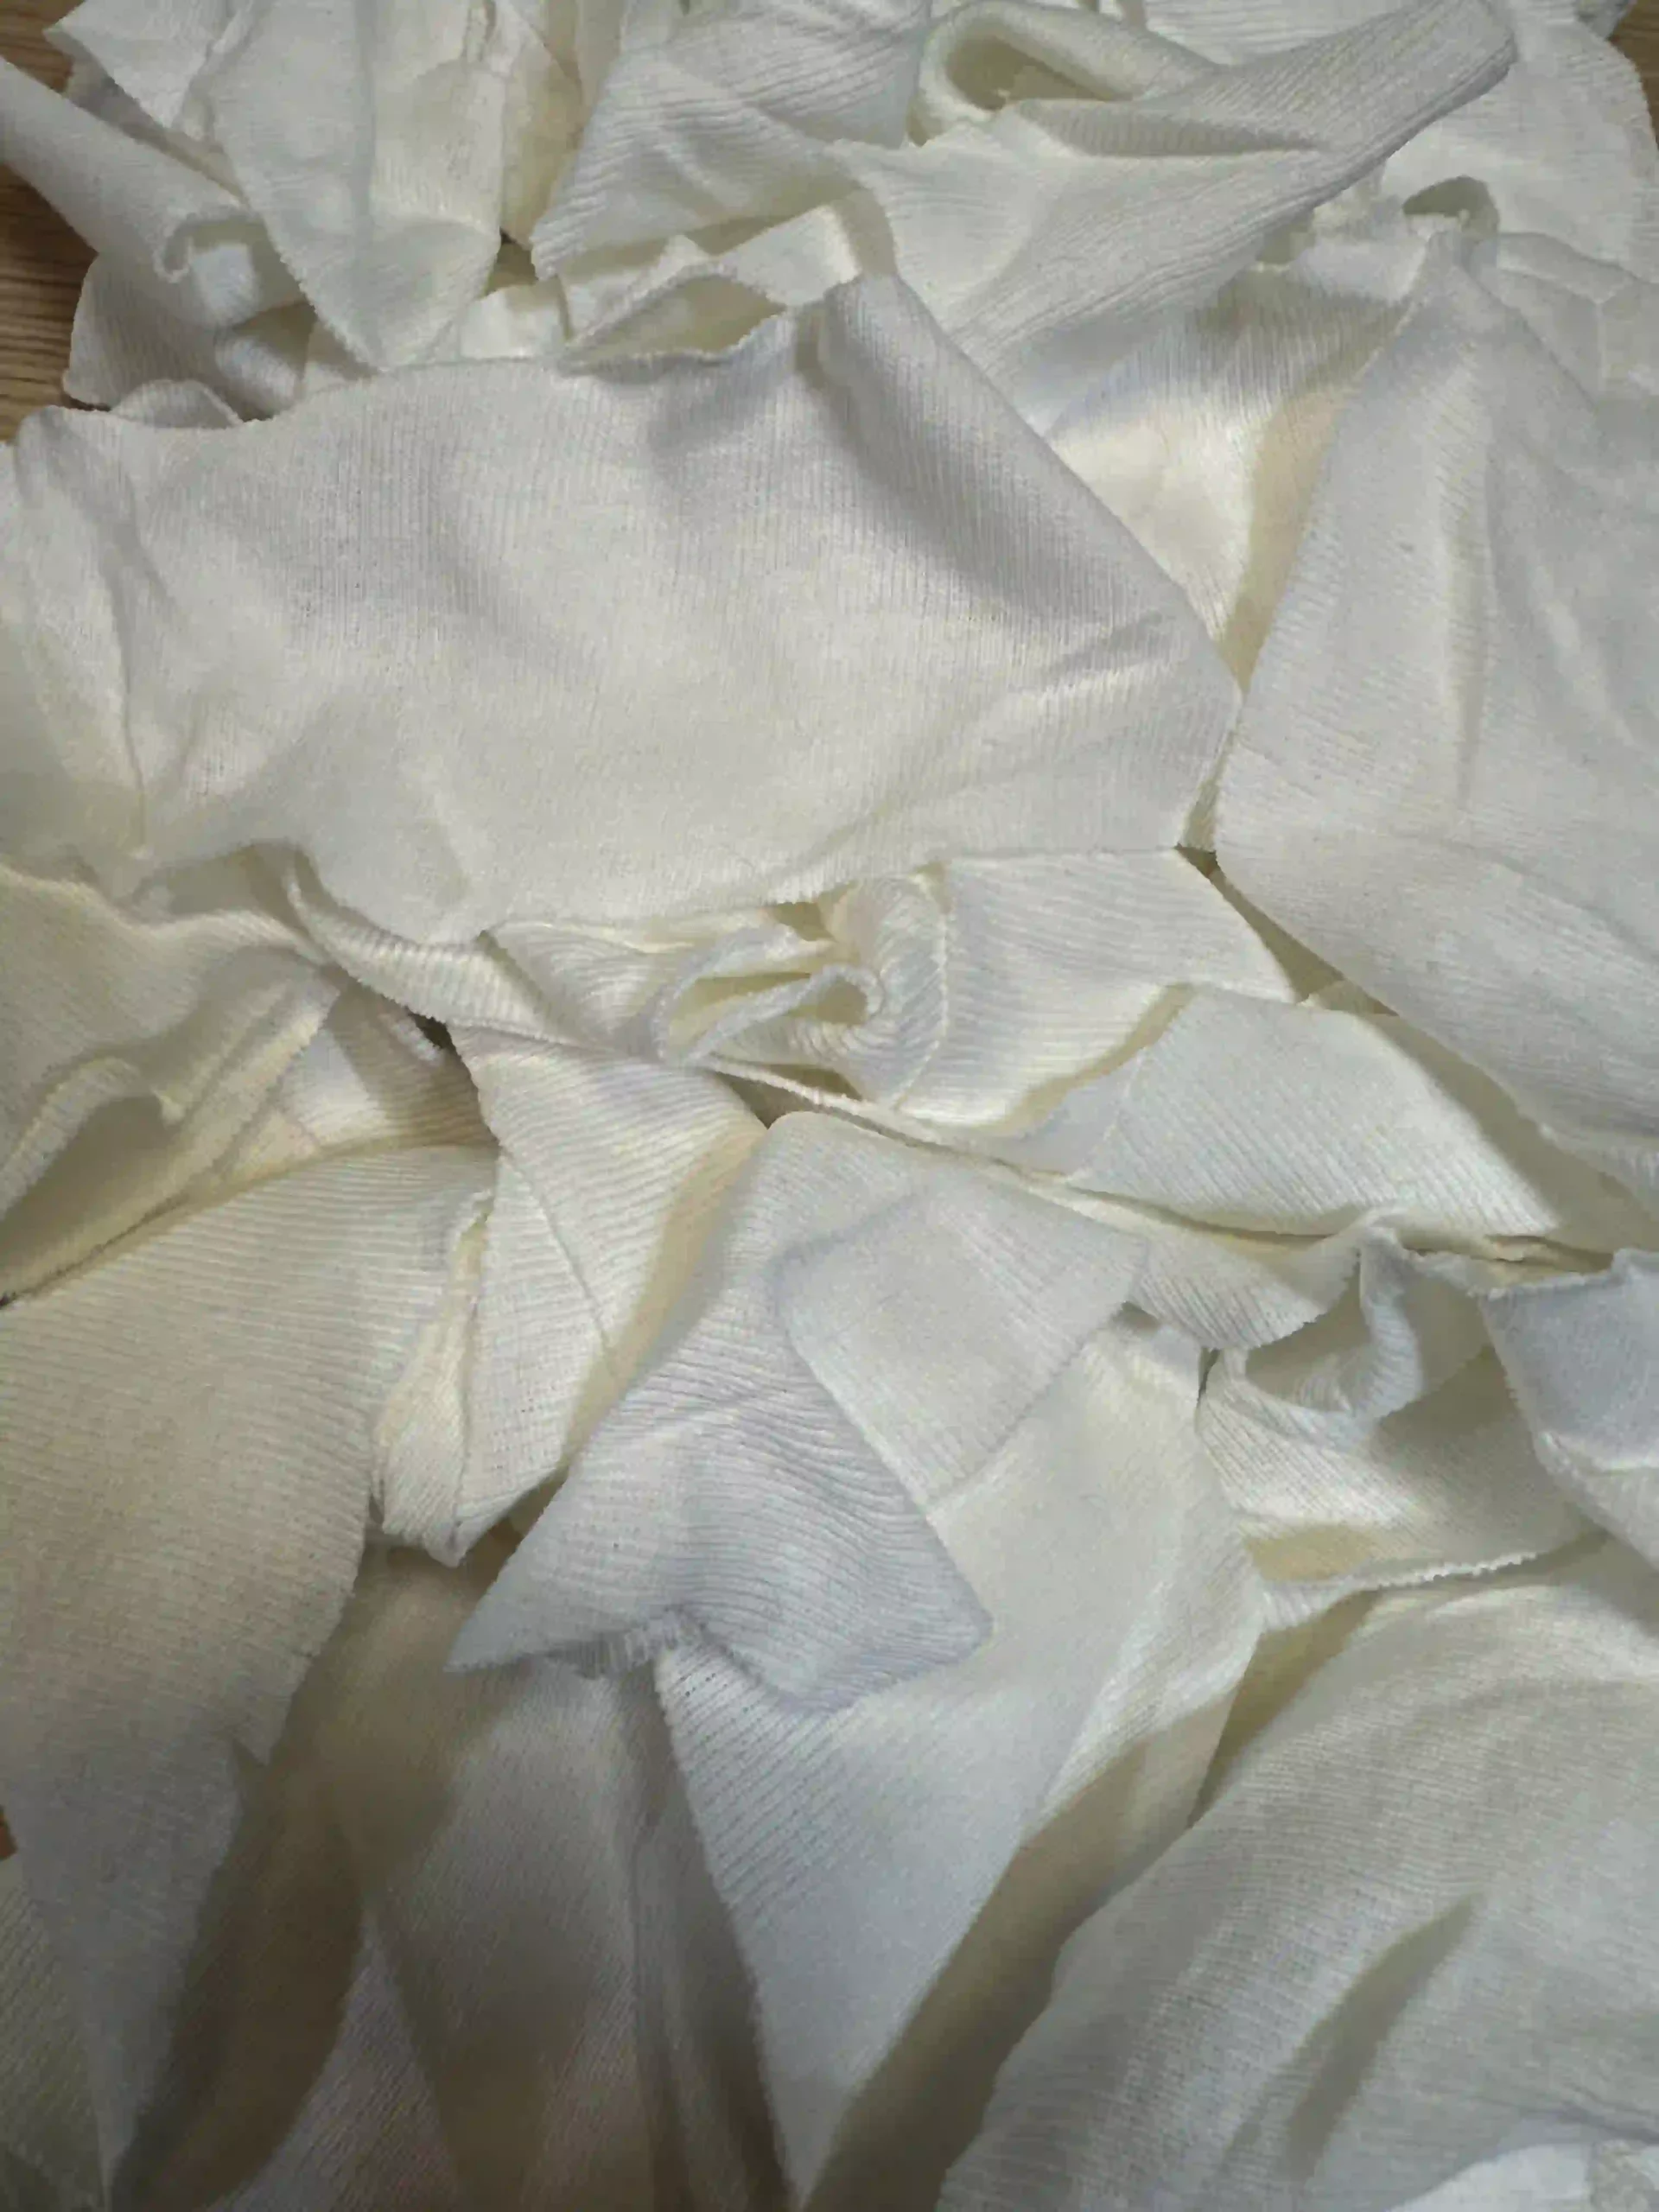 Cotton Rolls Pieces (Fabric) - WasteBase